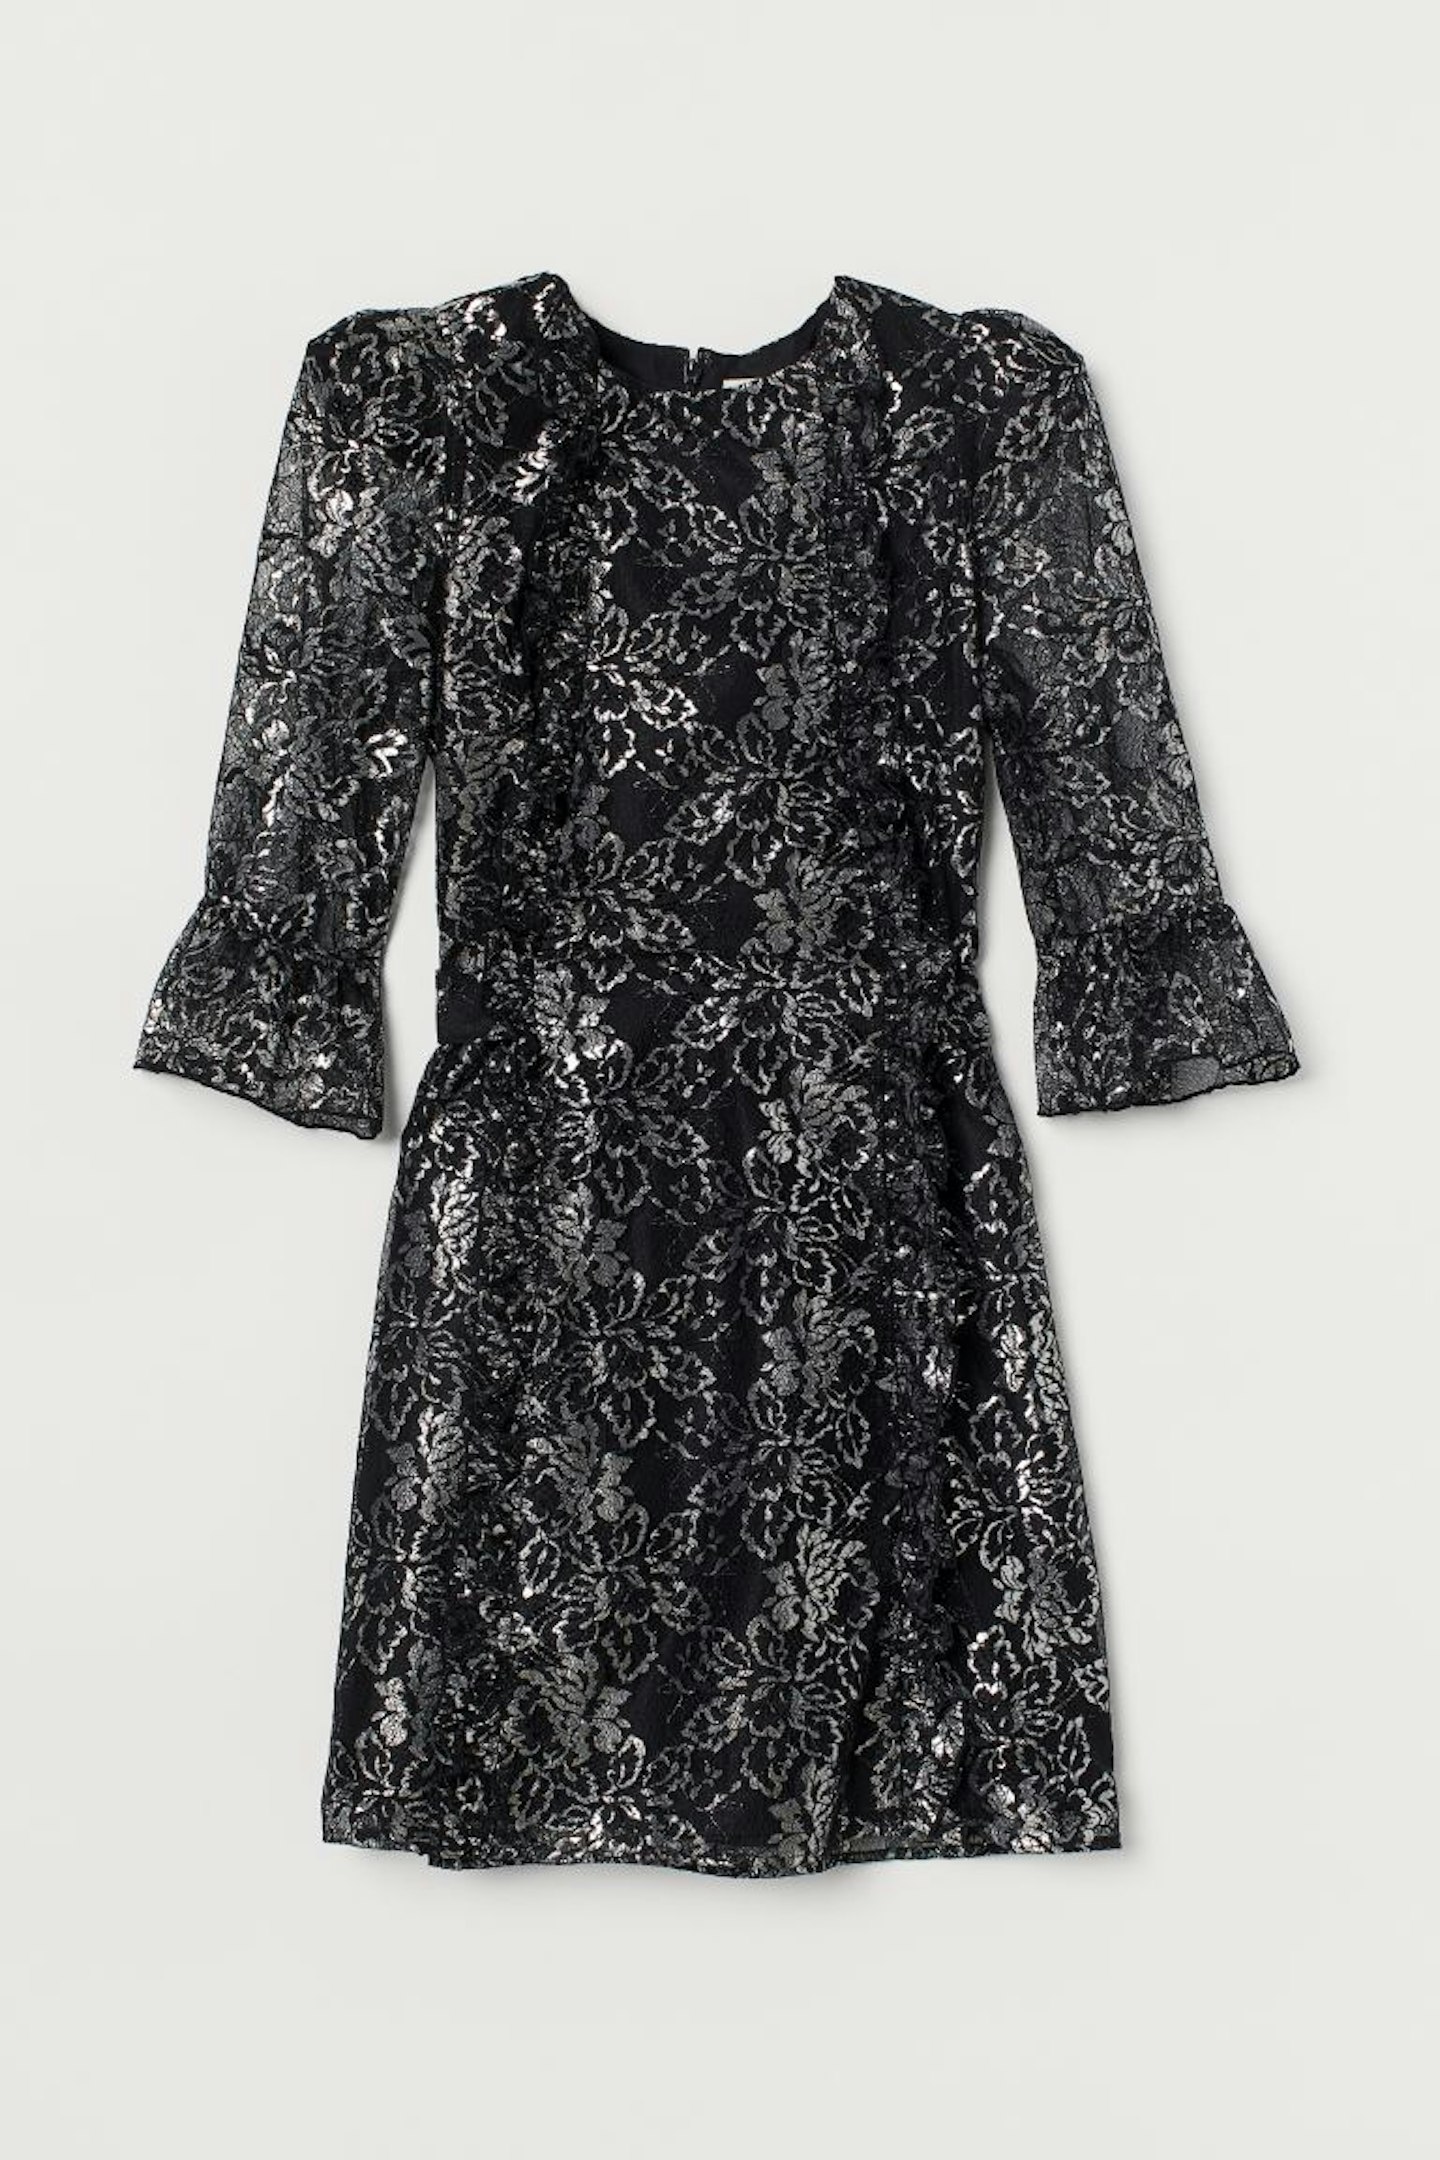 Lace Mini Dress, £19.99